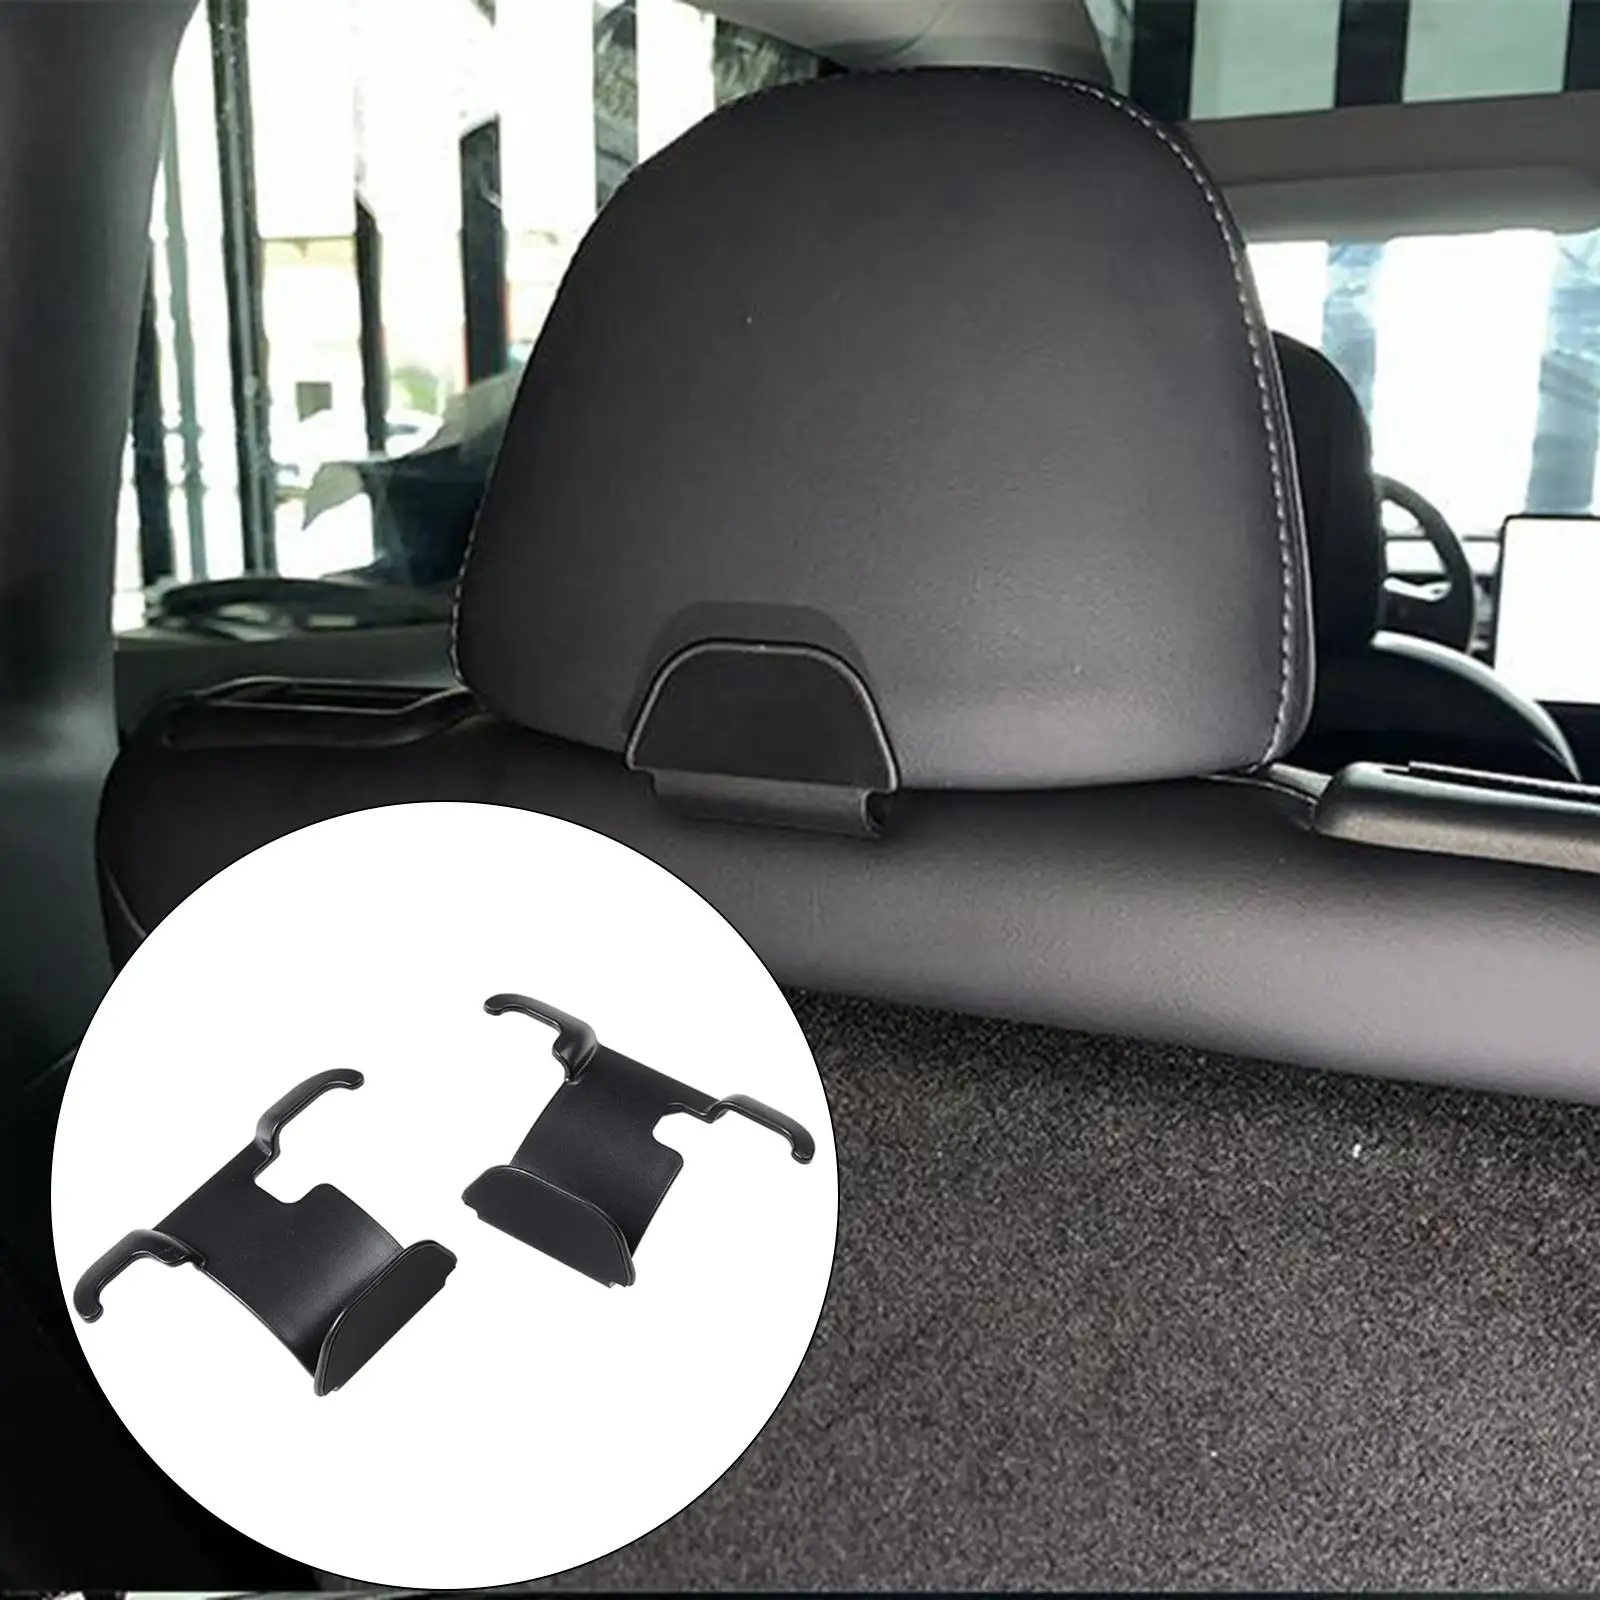 2Pcs Car Seat Headrest Hanger for Purse Bags Fit for Model Y